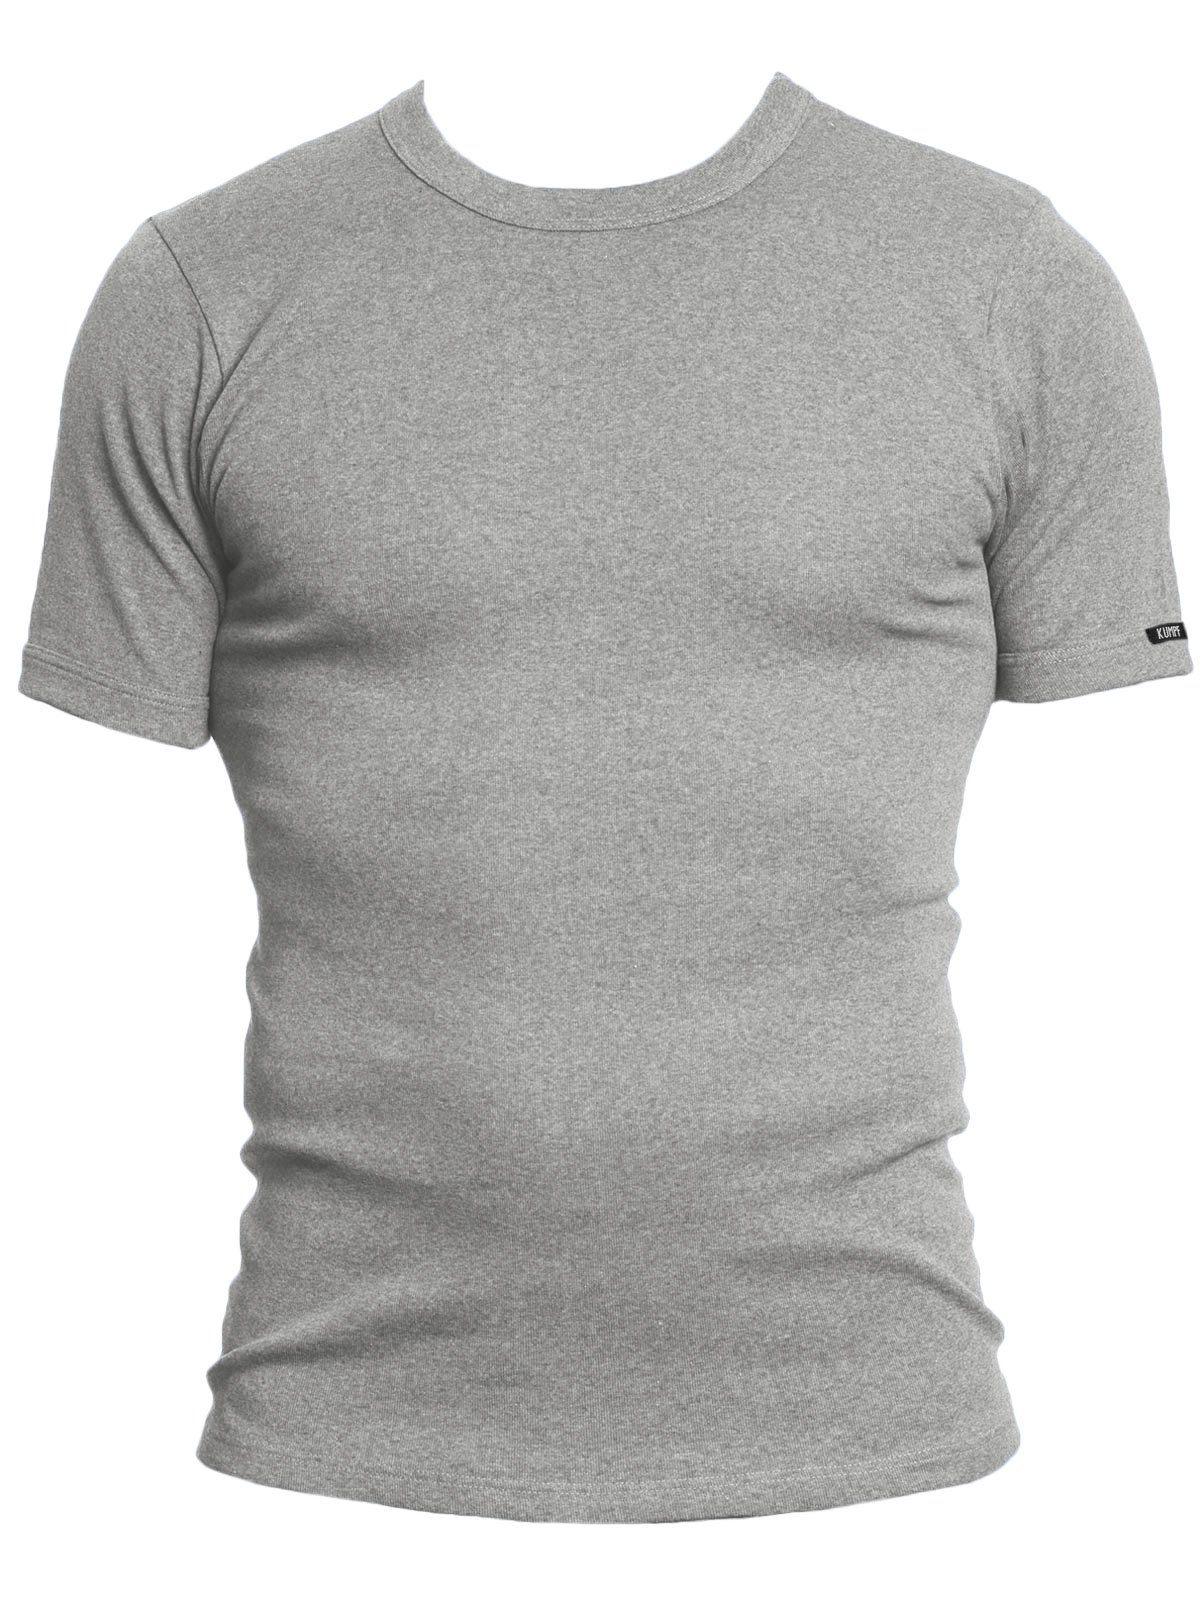 Herren Sparpack stahlgrau-melange Cotton 2-St) T-Shirt Markenqualität KUMPF Bio Unterziehshirt hohe (Spar-Set, 2er